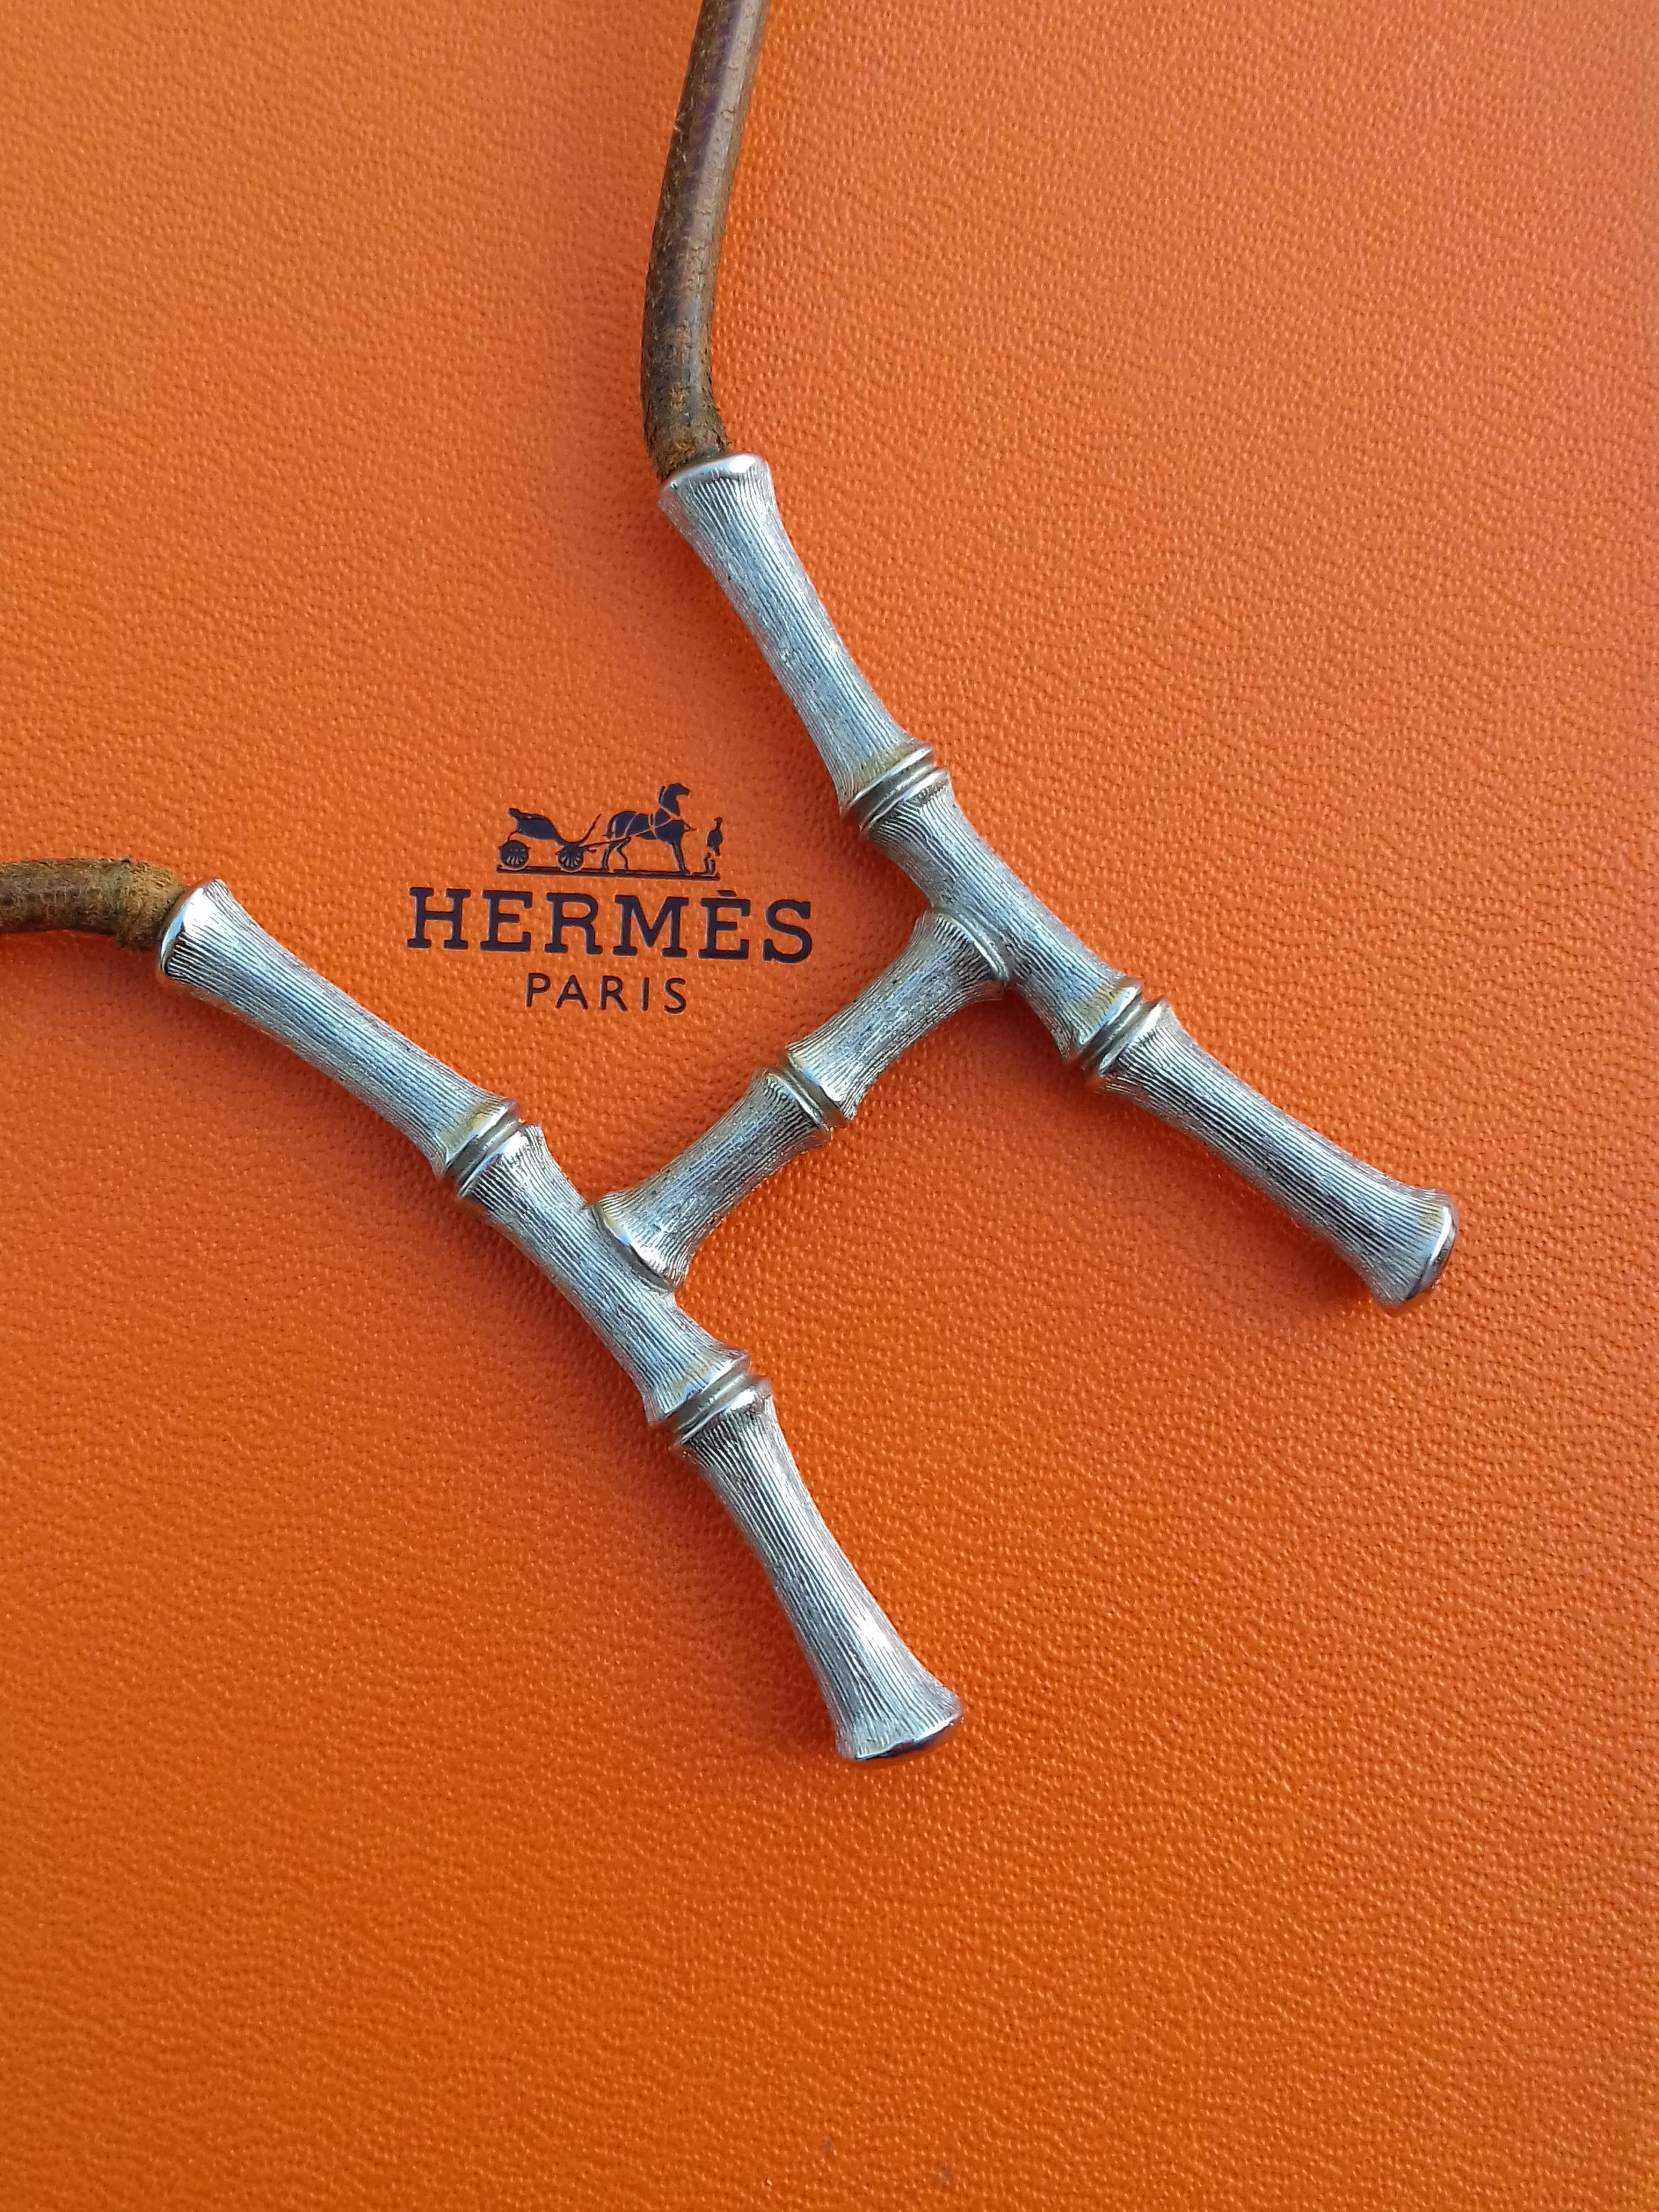 Hermès Paris Bambou Halter Necklace for scarf Collier Brown Leather RARE 14